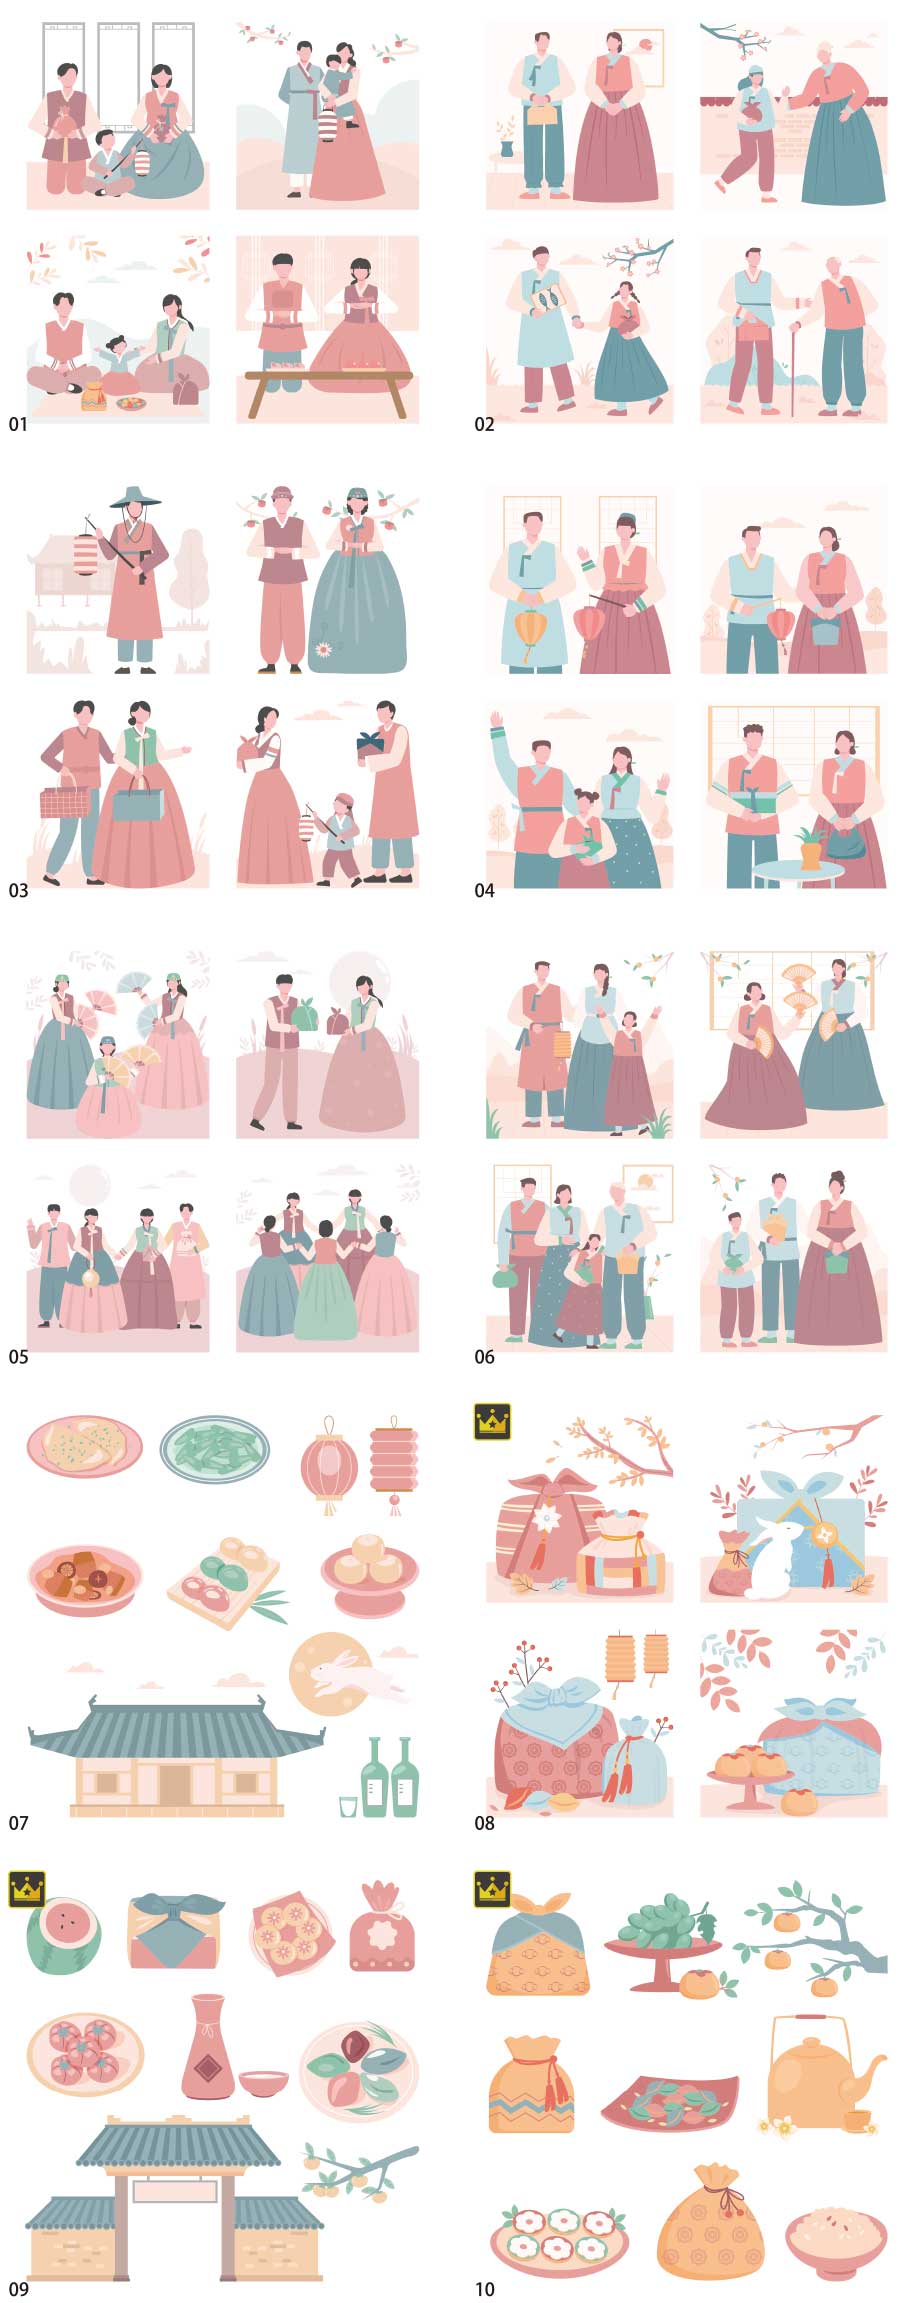 Korean event illustration collection